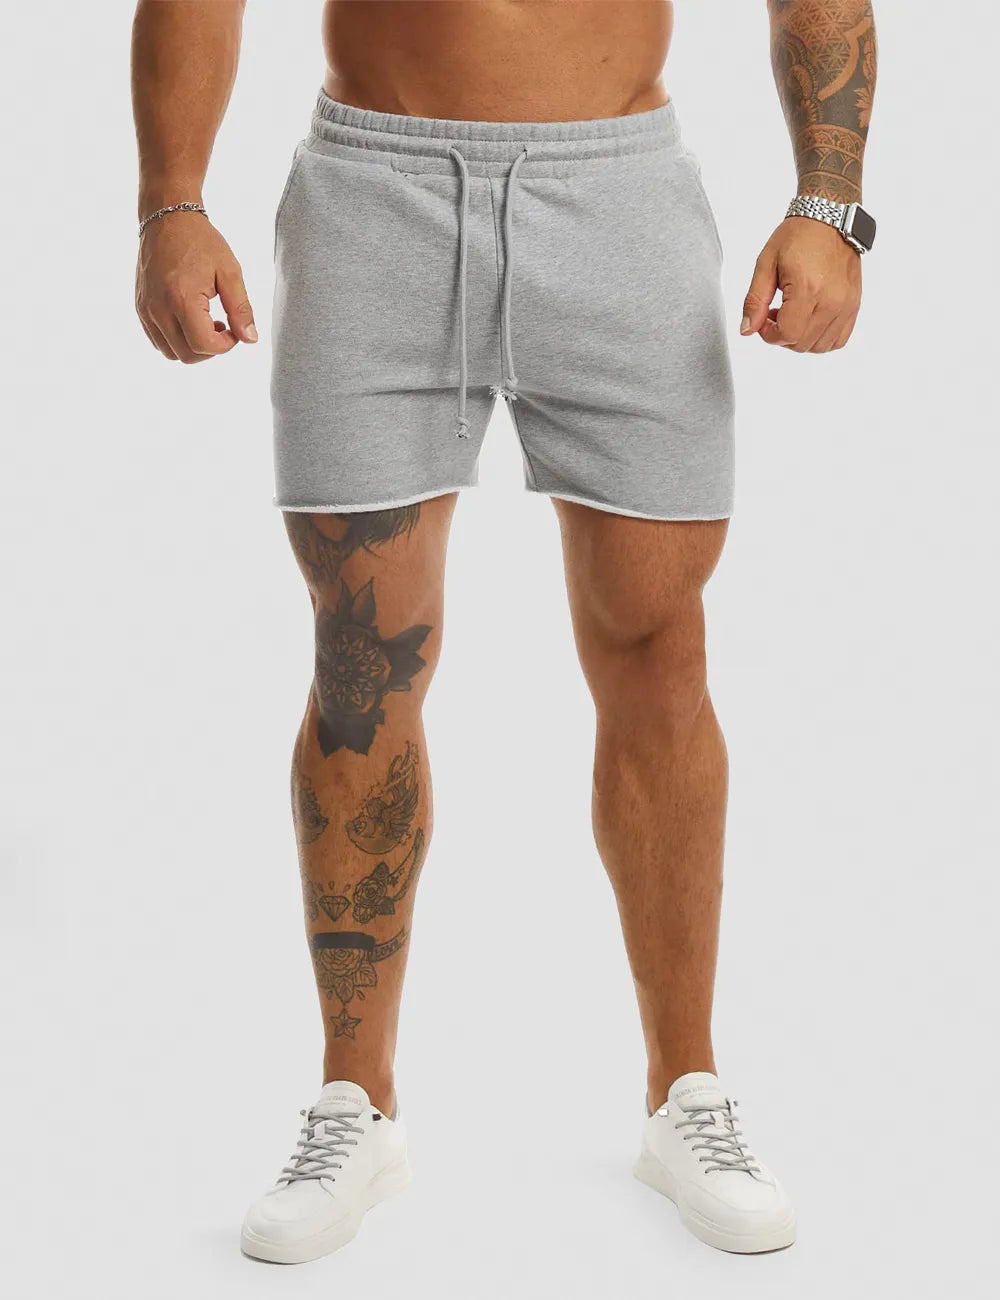 Fleece Bodybuilding Shorts - Grey